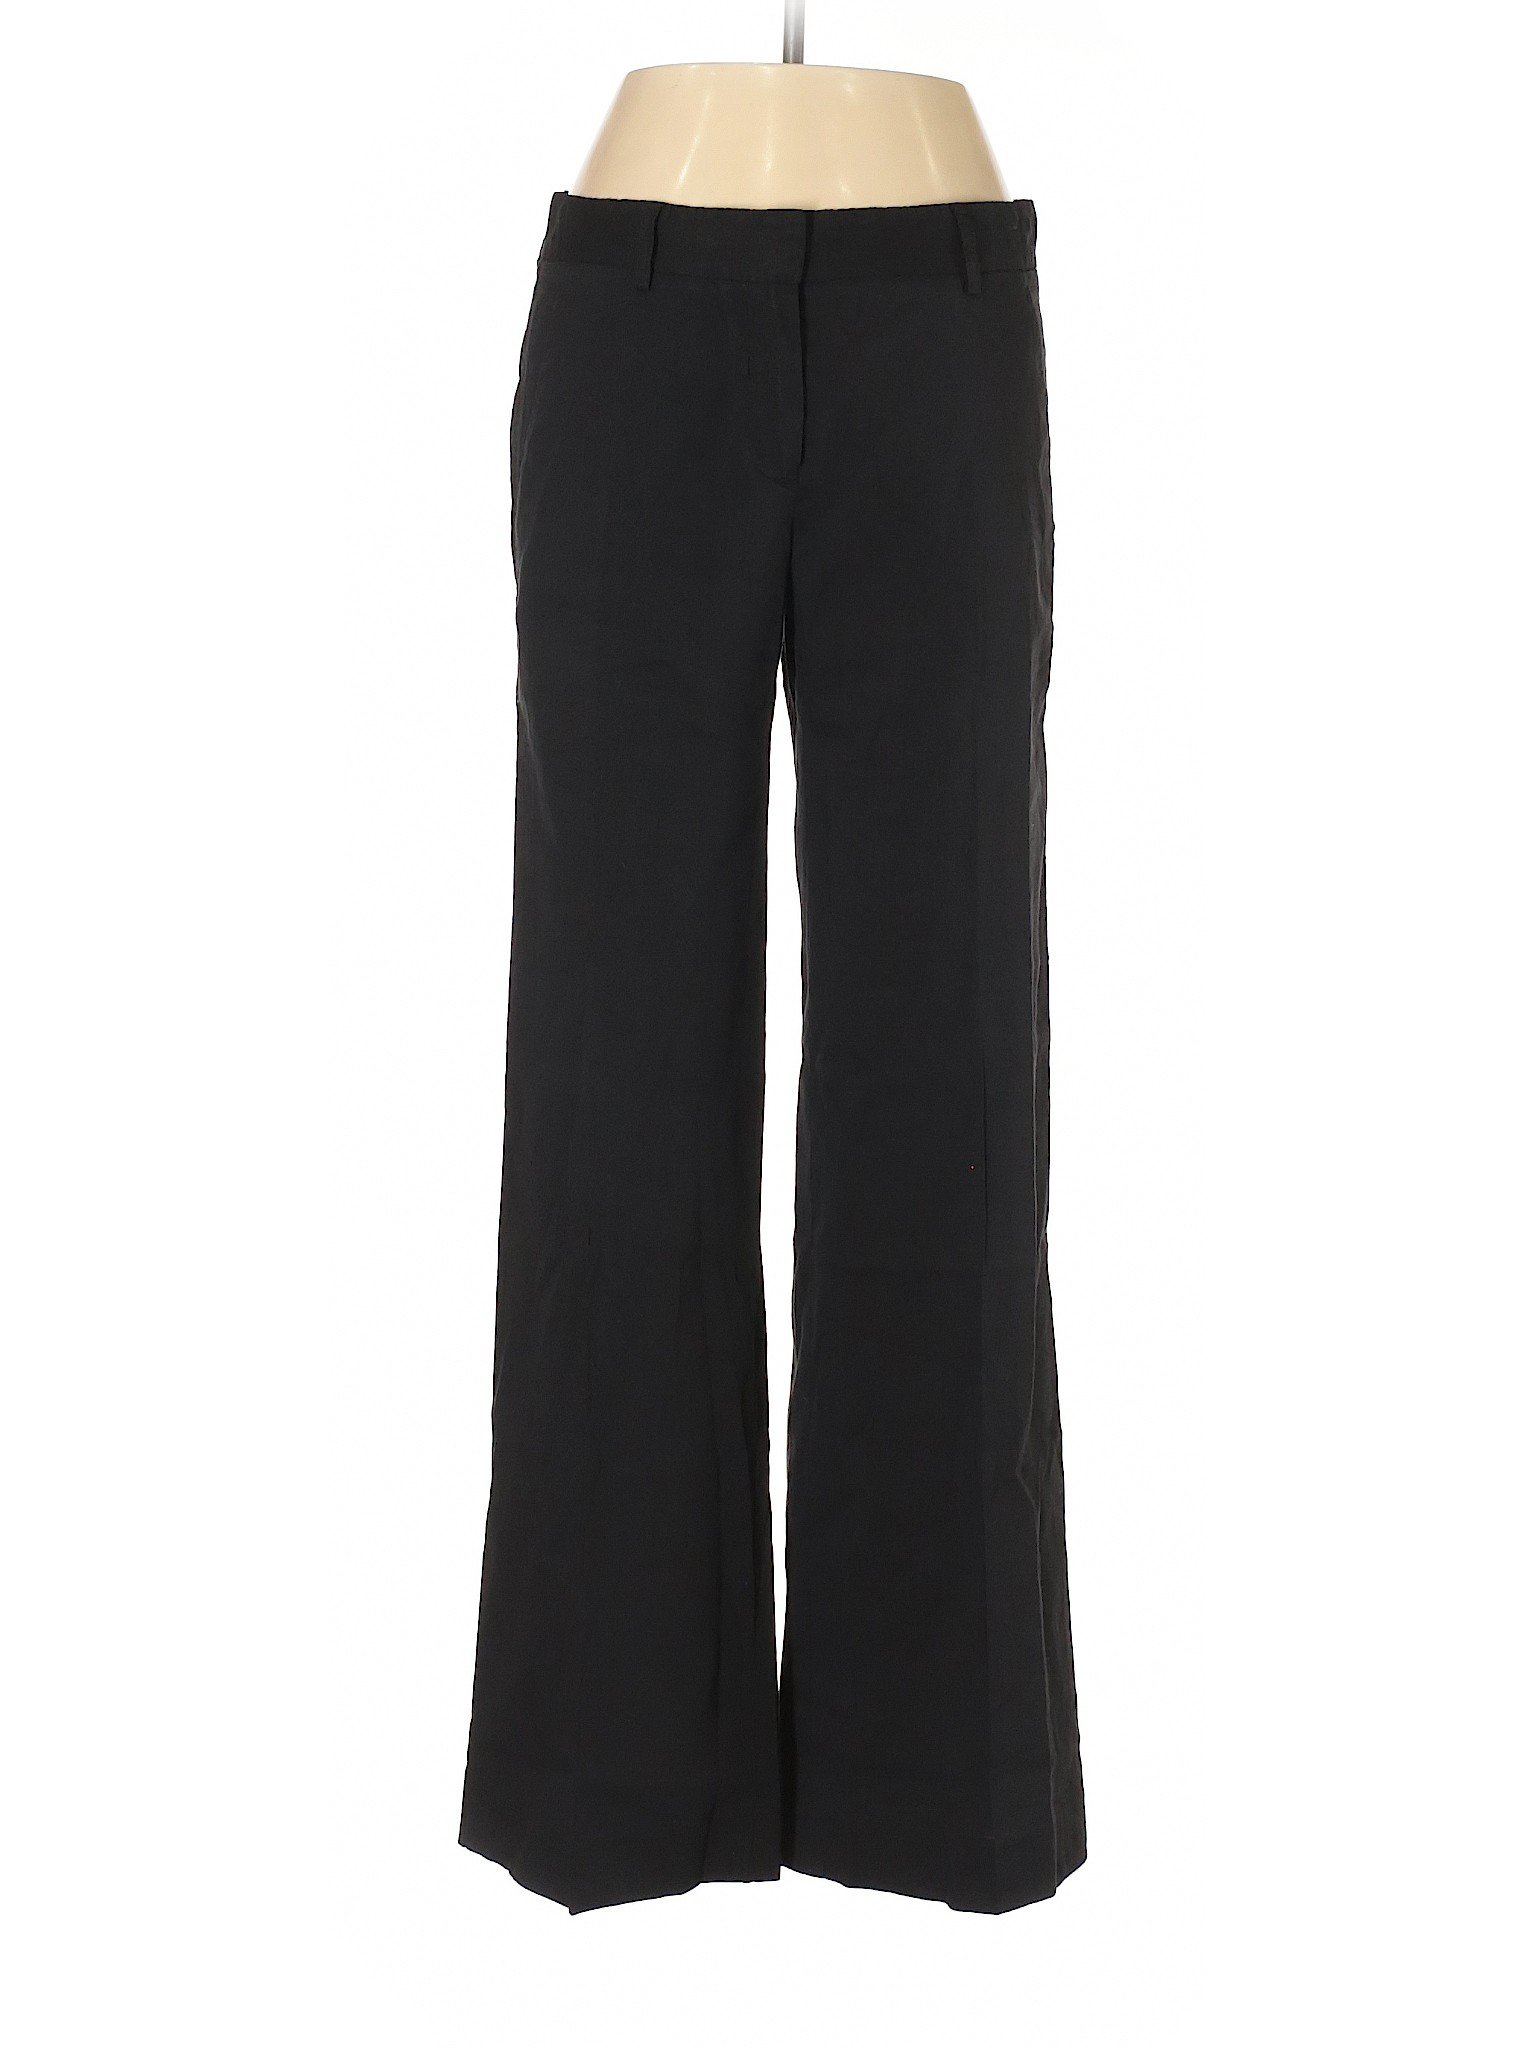 Theory Women Black Linen Pants 4 | eBay